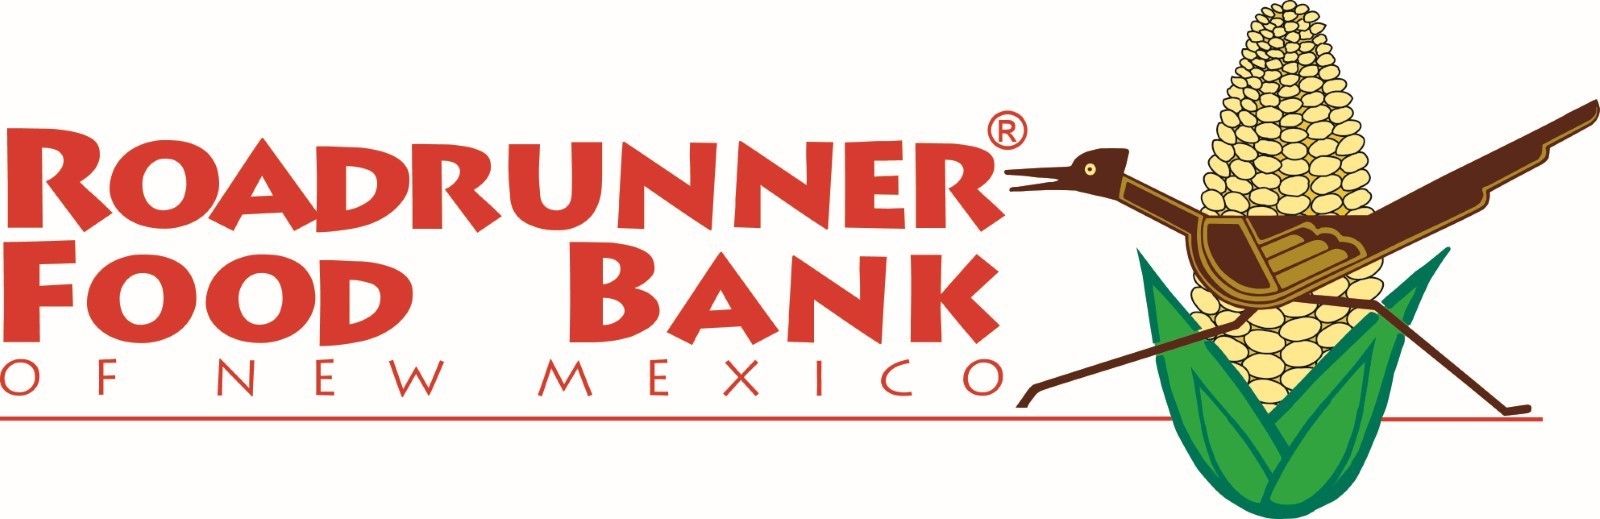 Logo de la banque alimentaire Roadrunner